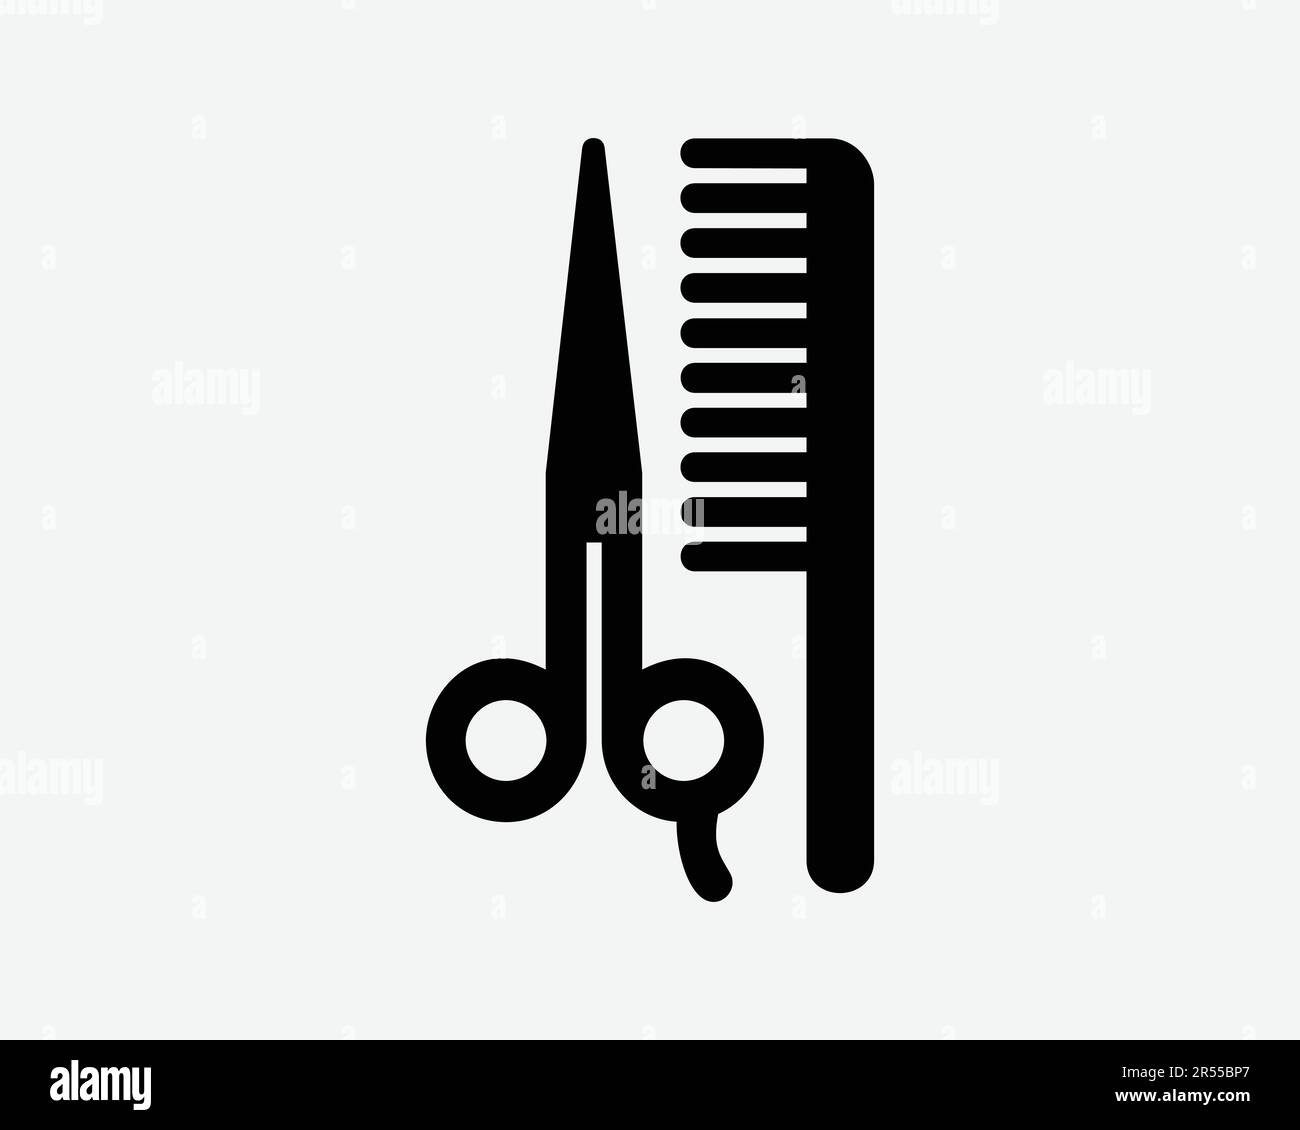 Beauty Salon Icon. Hairdresser Service Barber Hair Cut Style Scissor Scissors Comb Sign Symbol Black Artwork Graphic Illustration Clipart EPS Vector Stock Vector